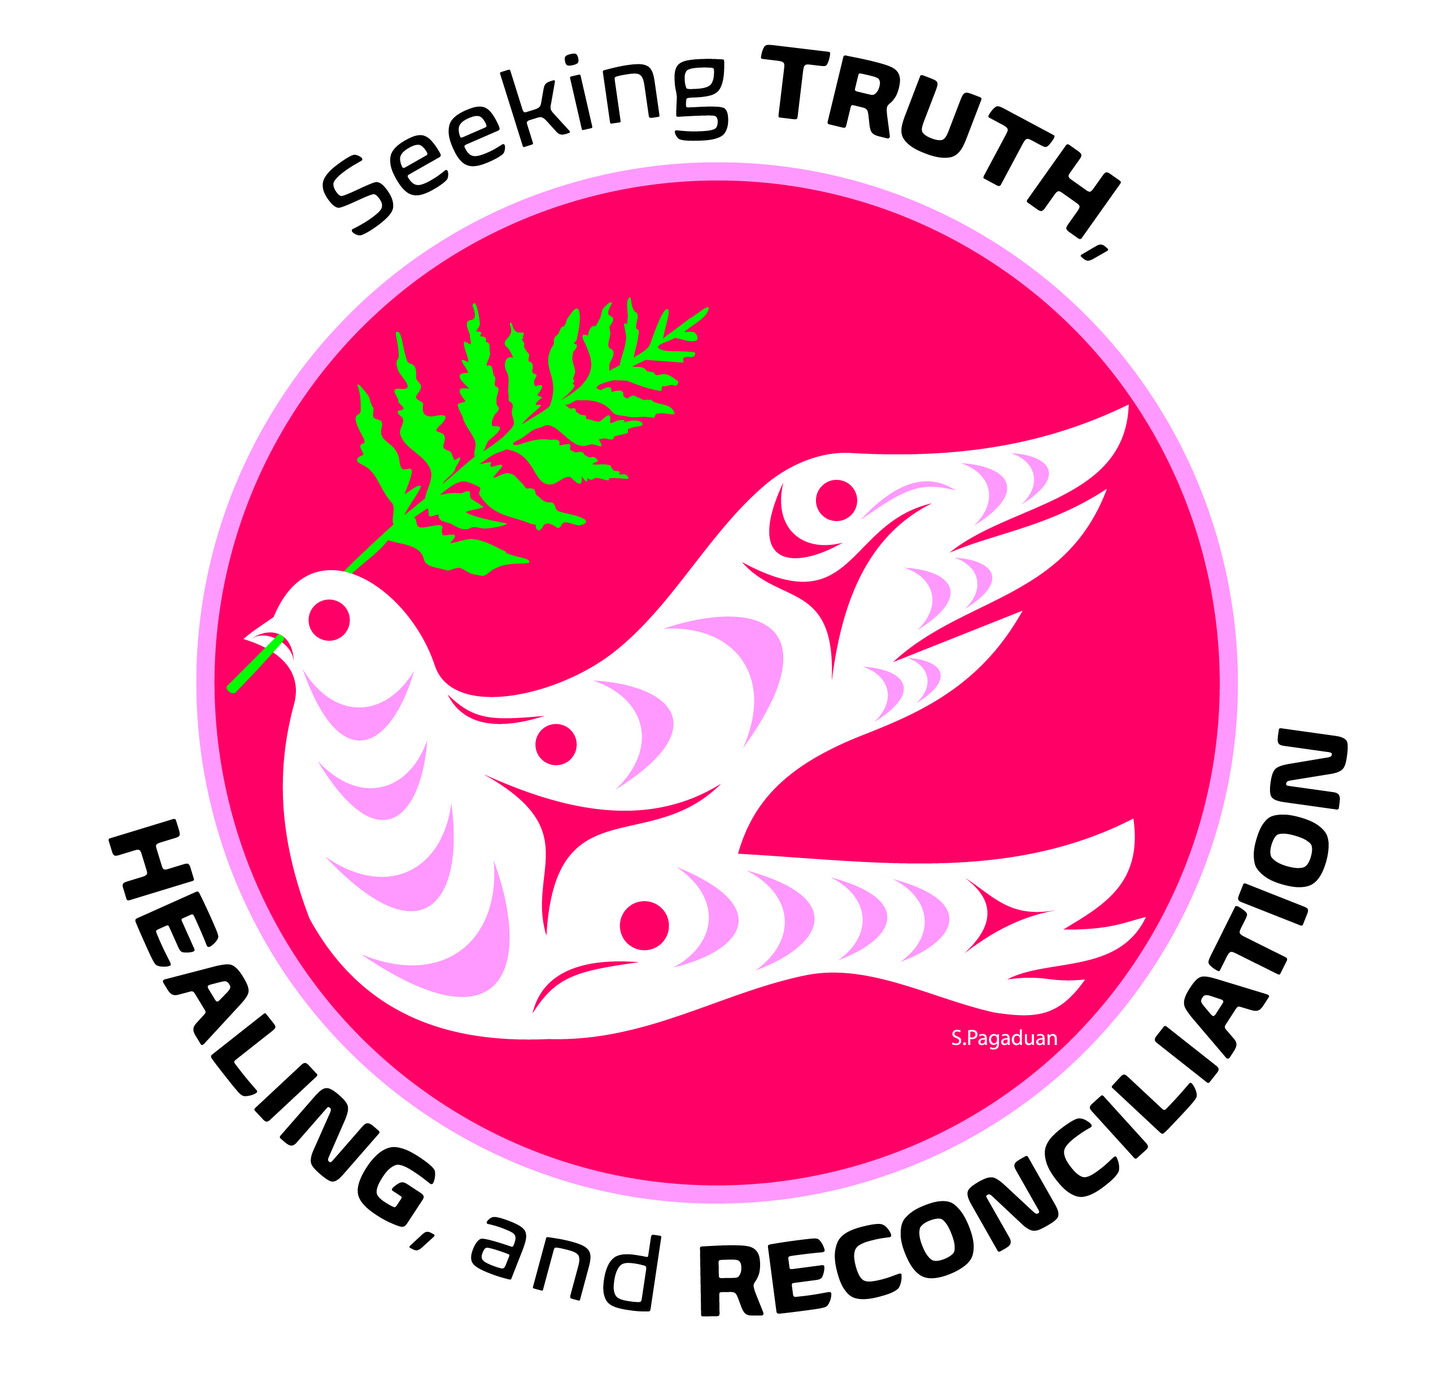 seeking truth logo